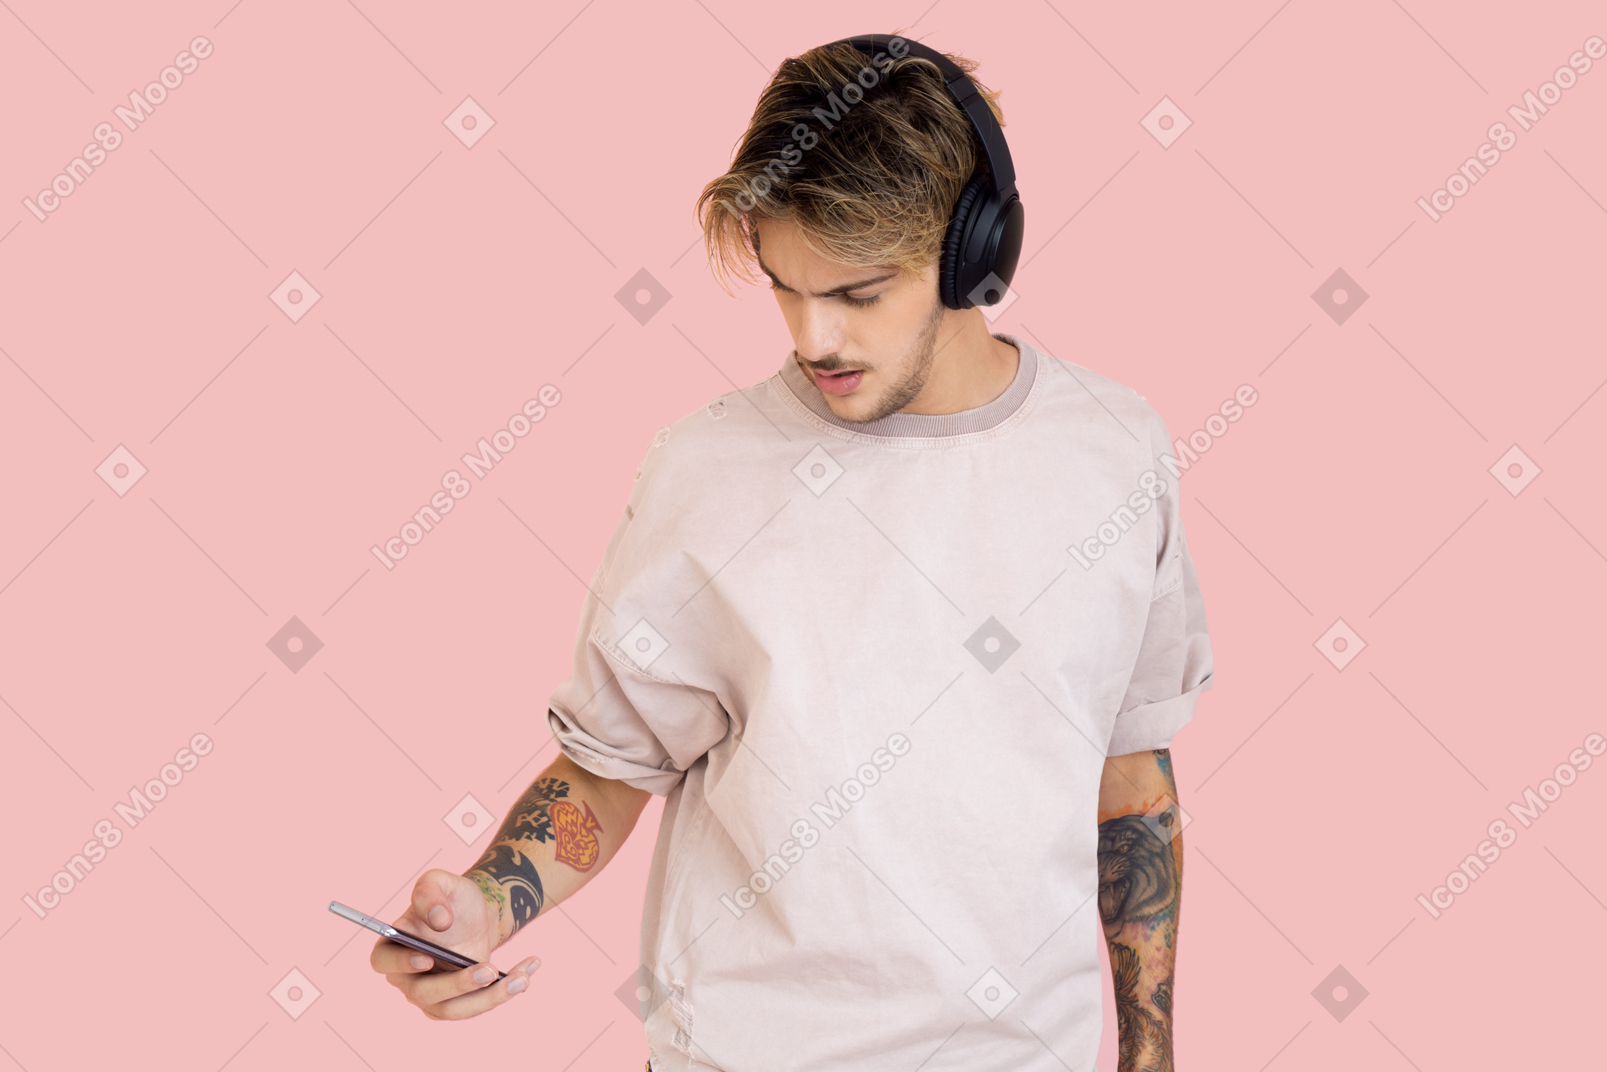 Young man in headphones holding smartphone